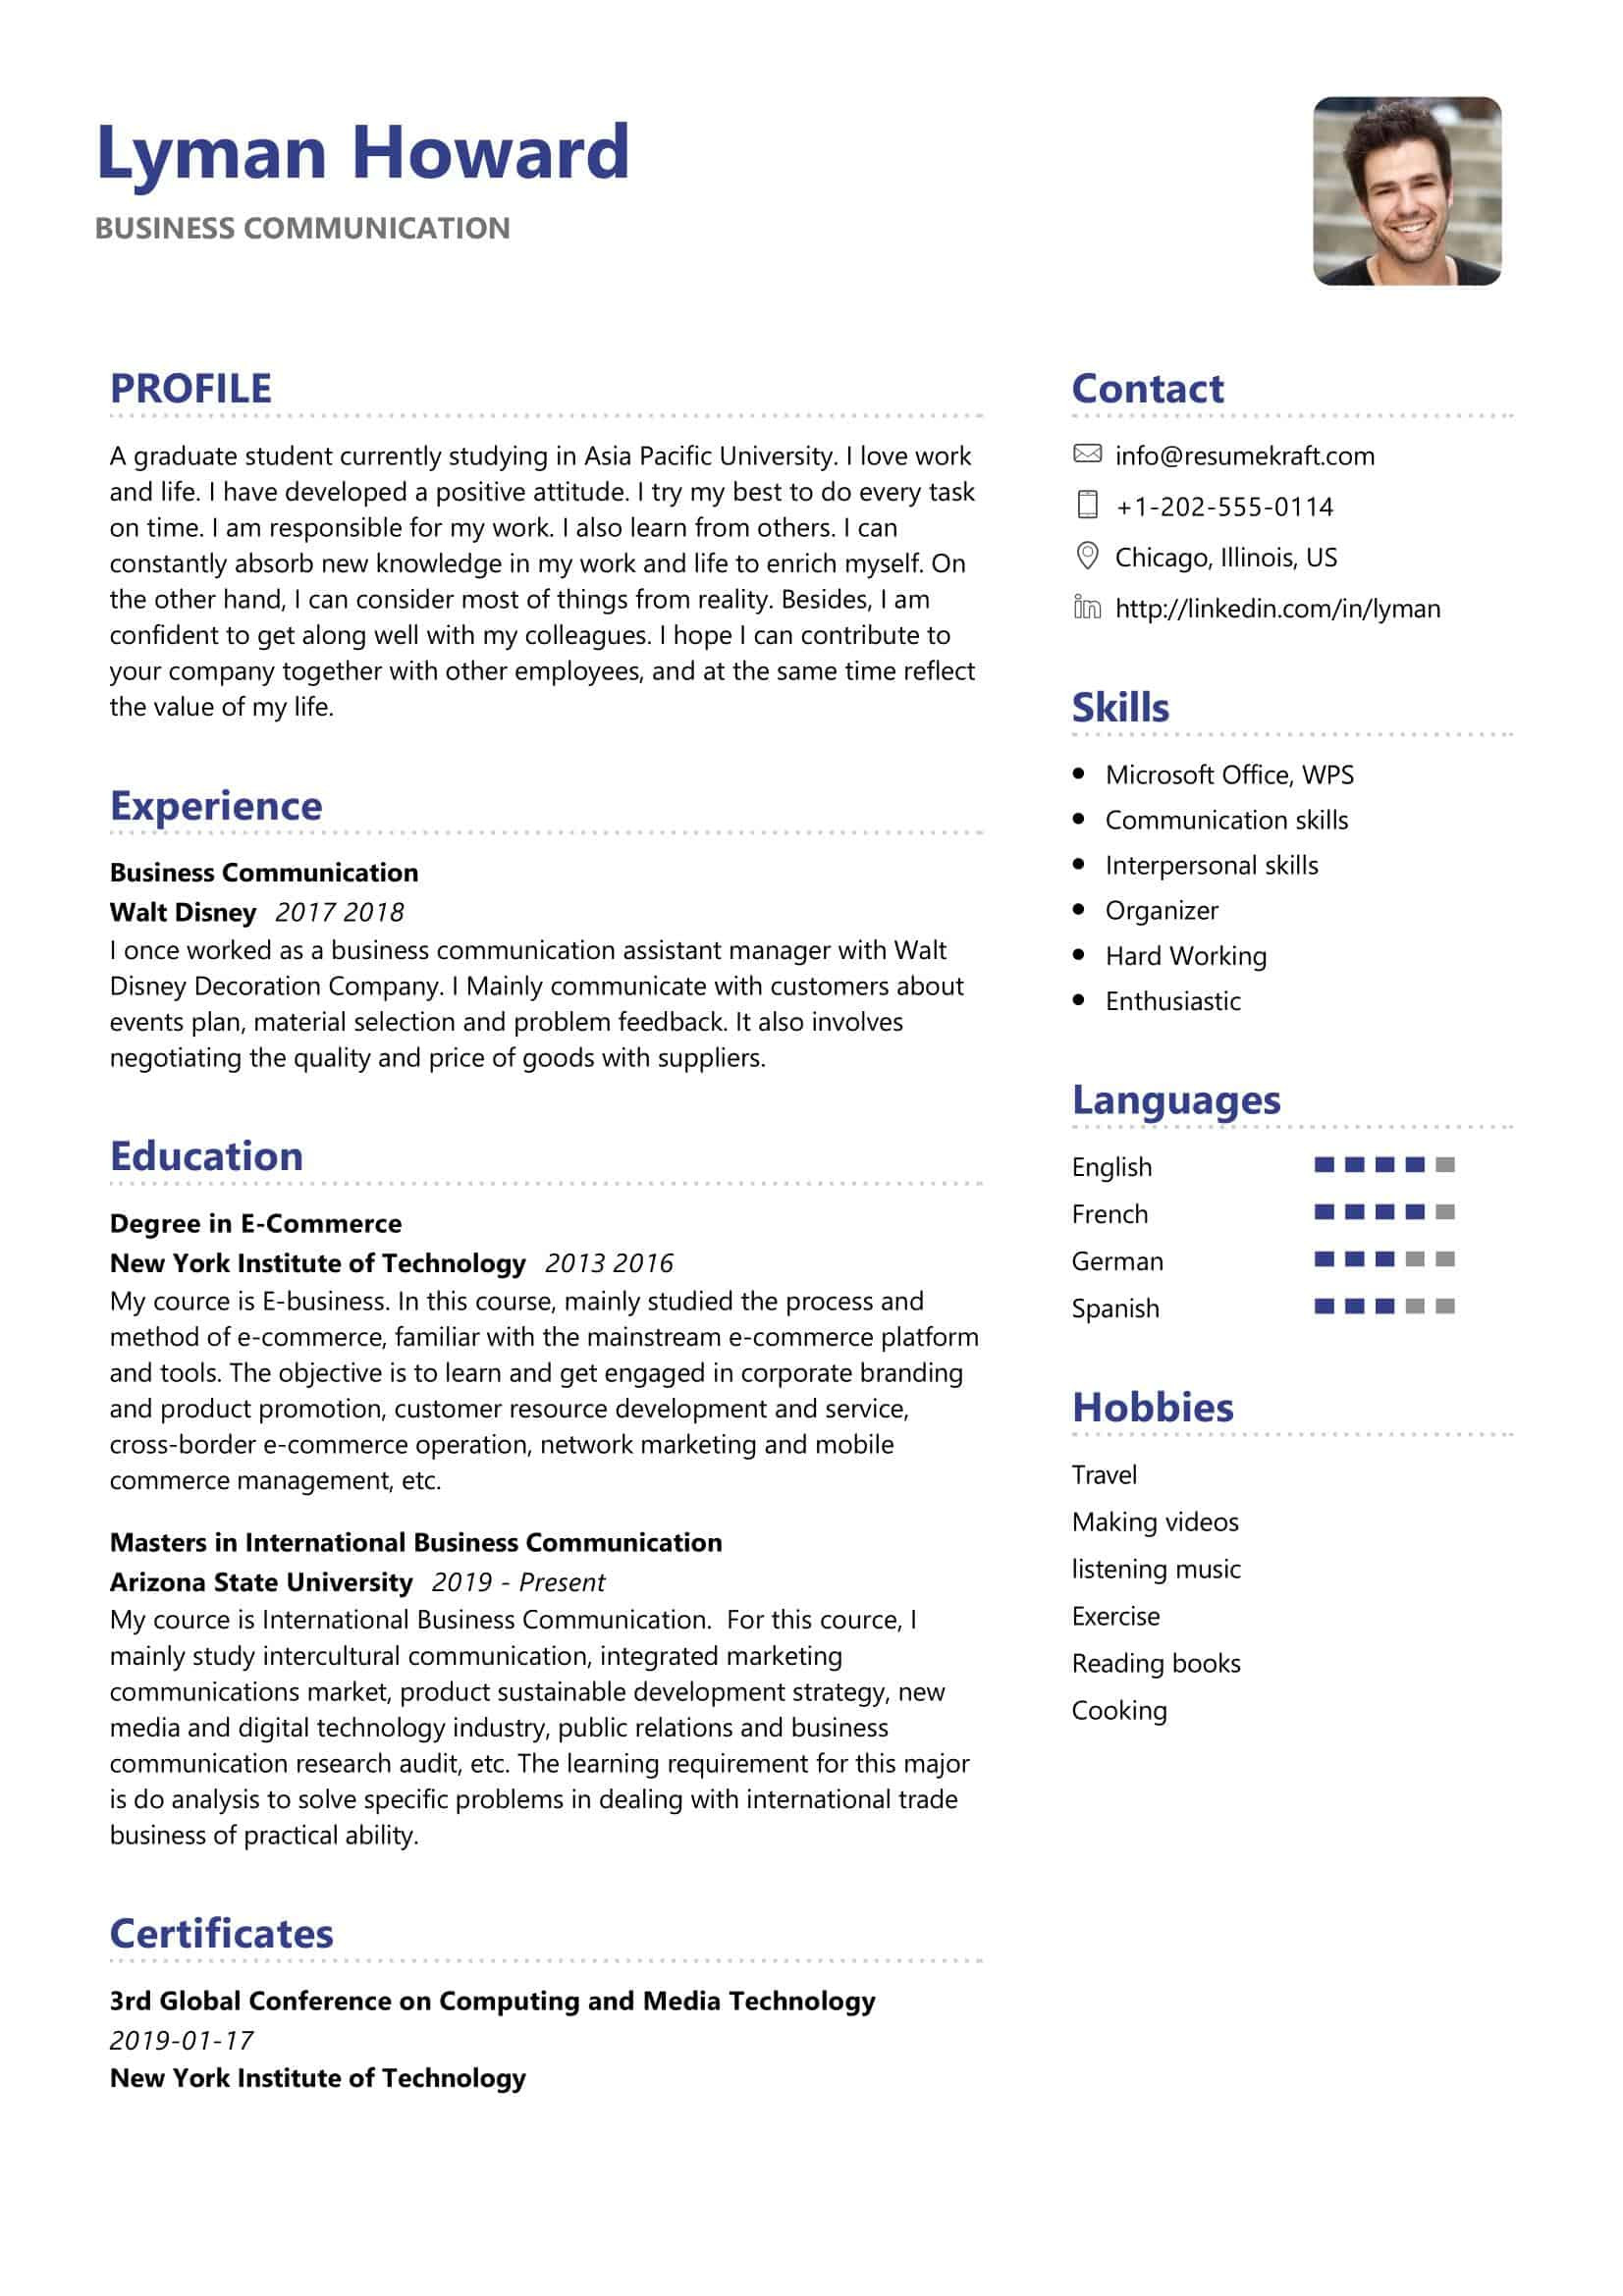 Sample Resume for Business Management Student Business Communication Resume Sample 2021 Writing Tips – Resumekraft